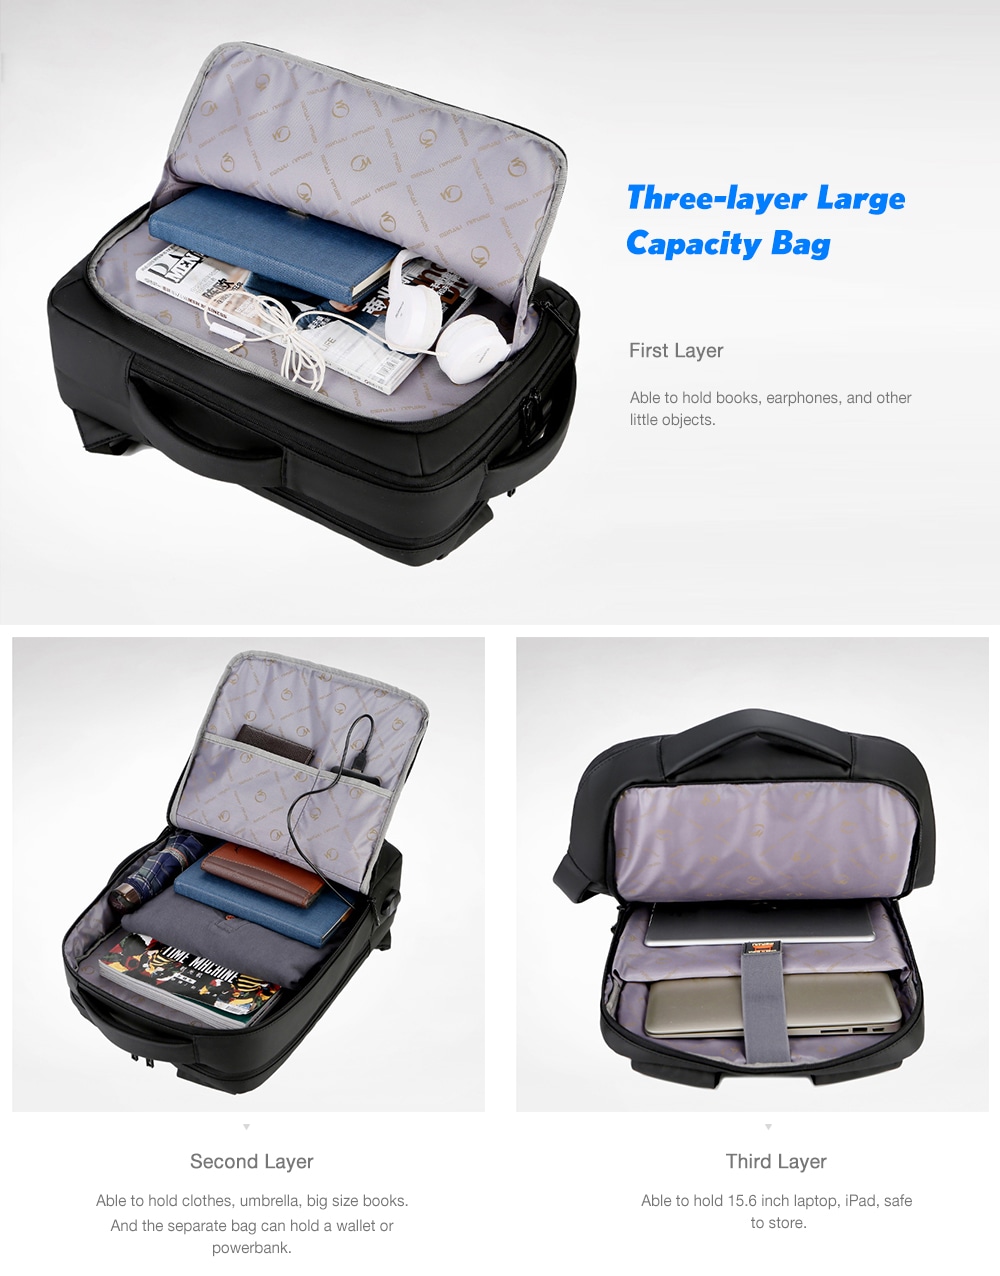 meinaili Man Nylon Business Travel Backpack Student Laptop Bag with USB Port- Black